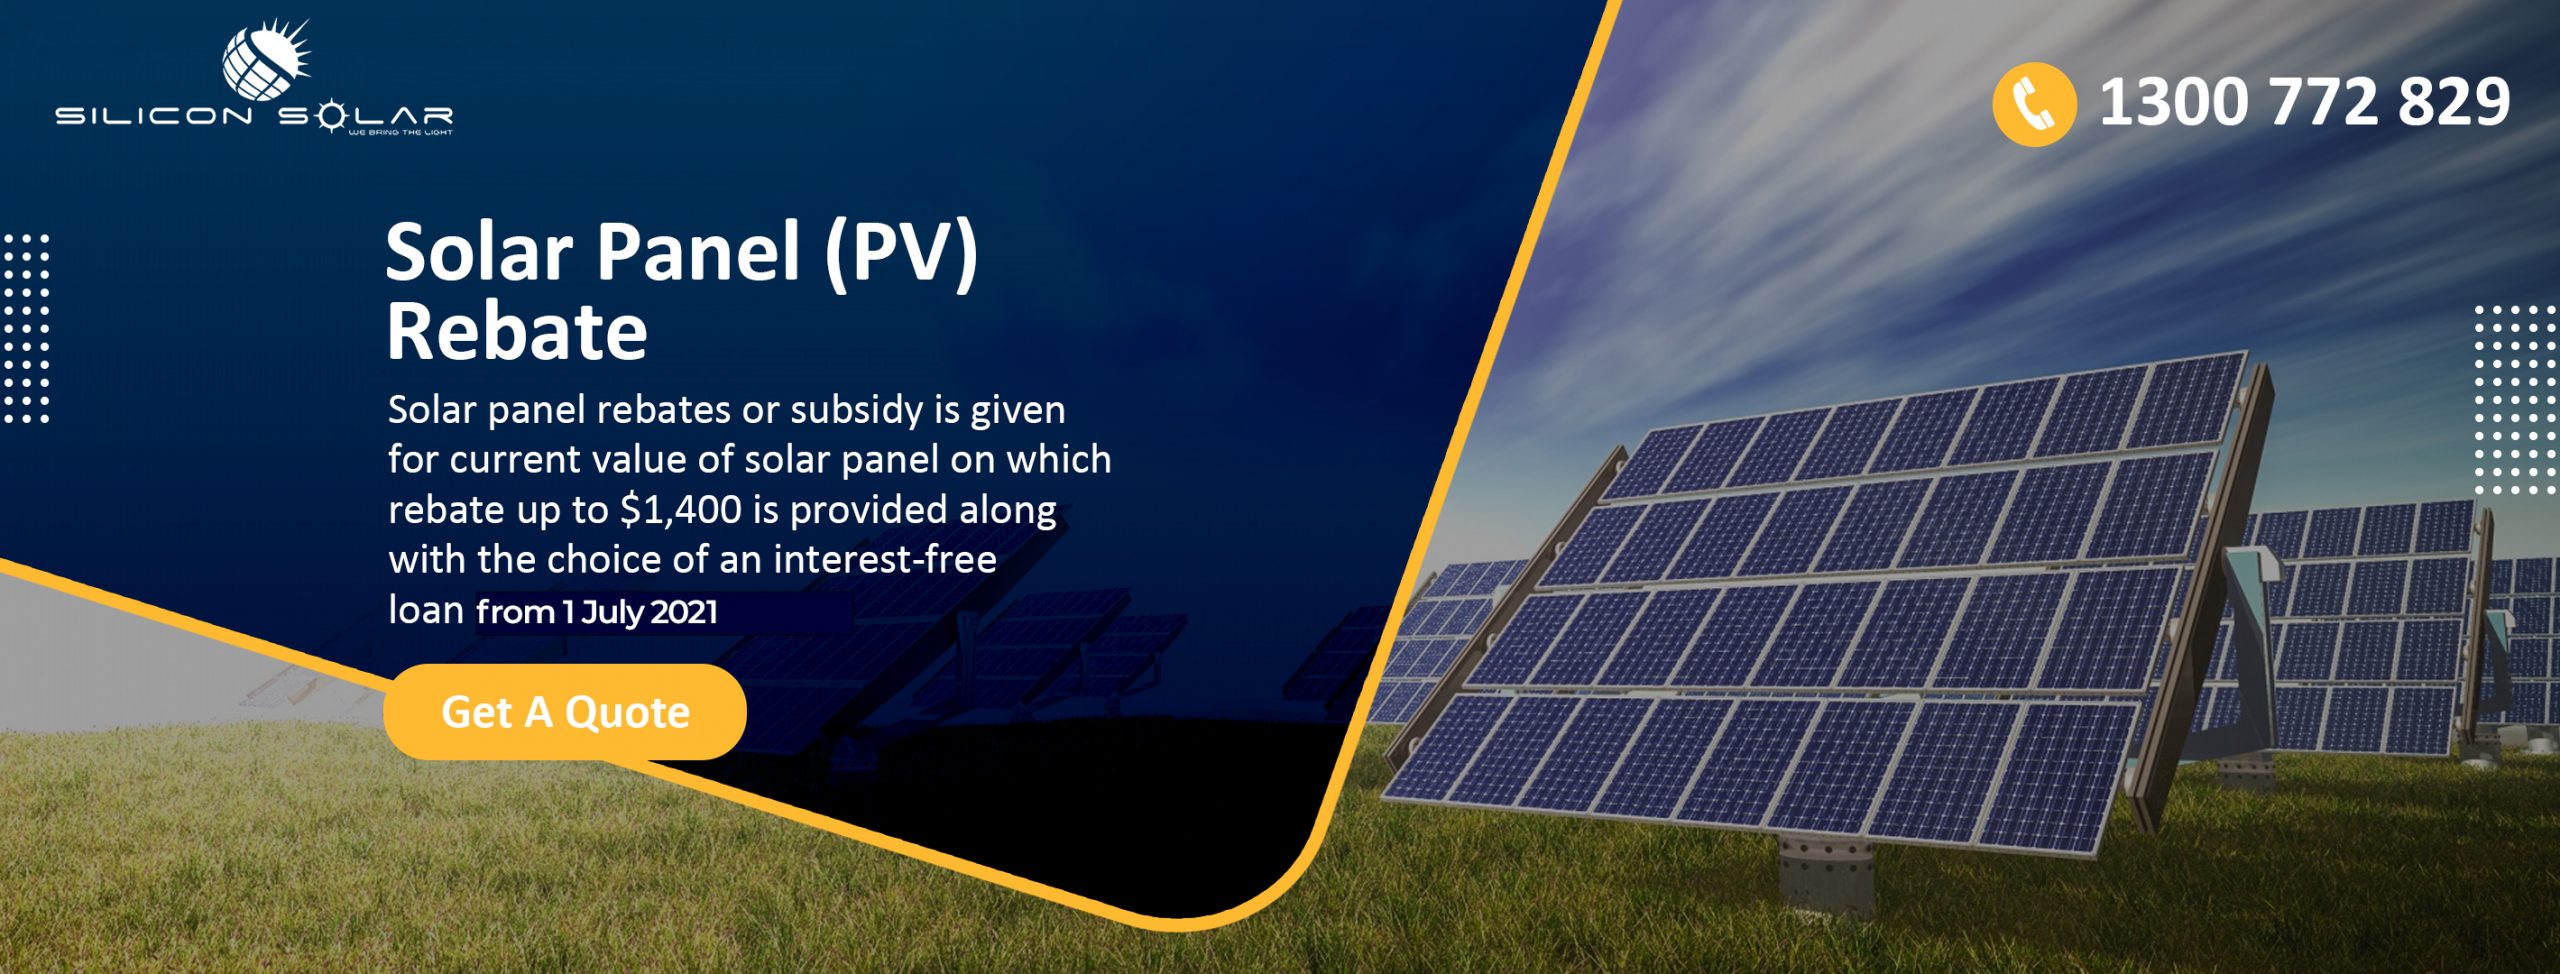 redding-electric-utility-solar-pv-rebate-program-photovoltaics